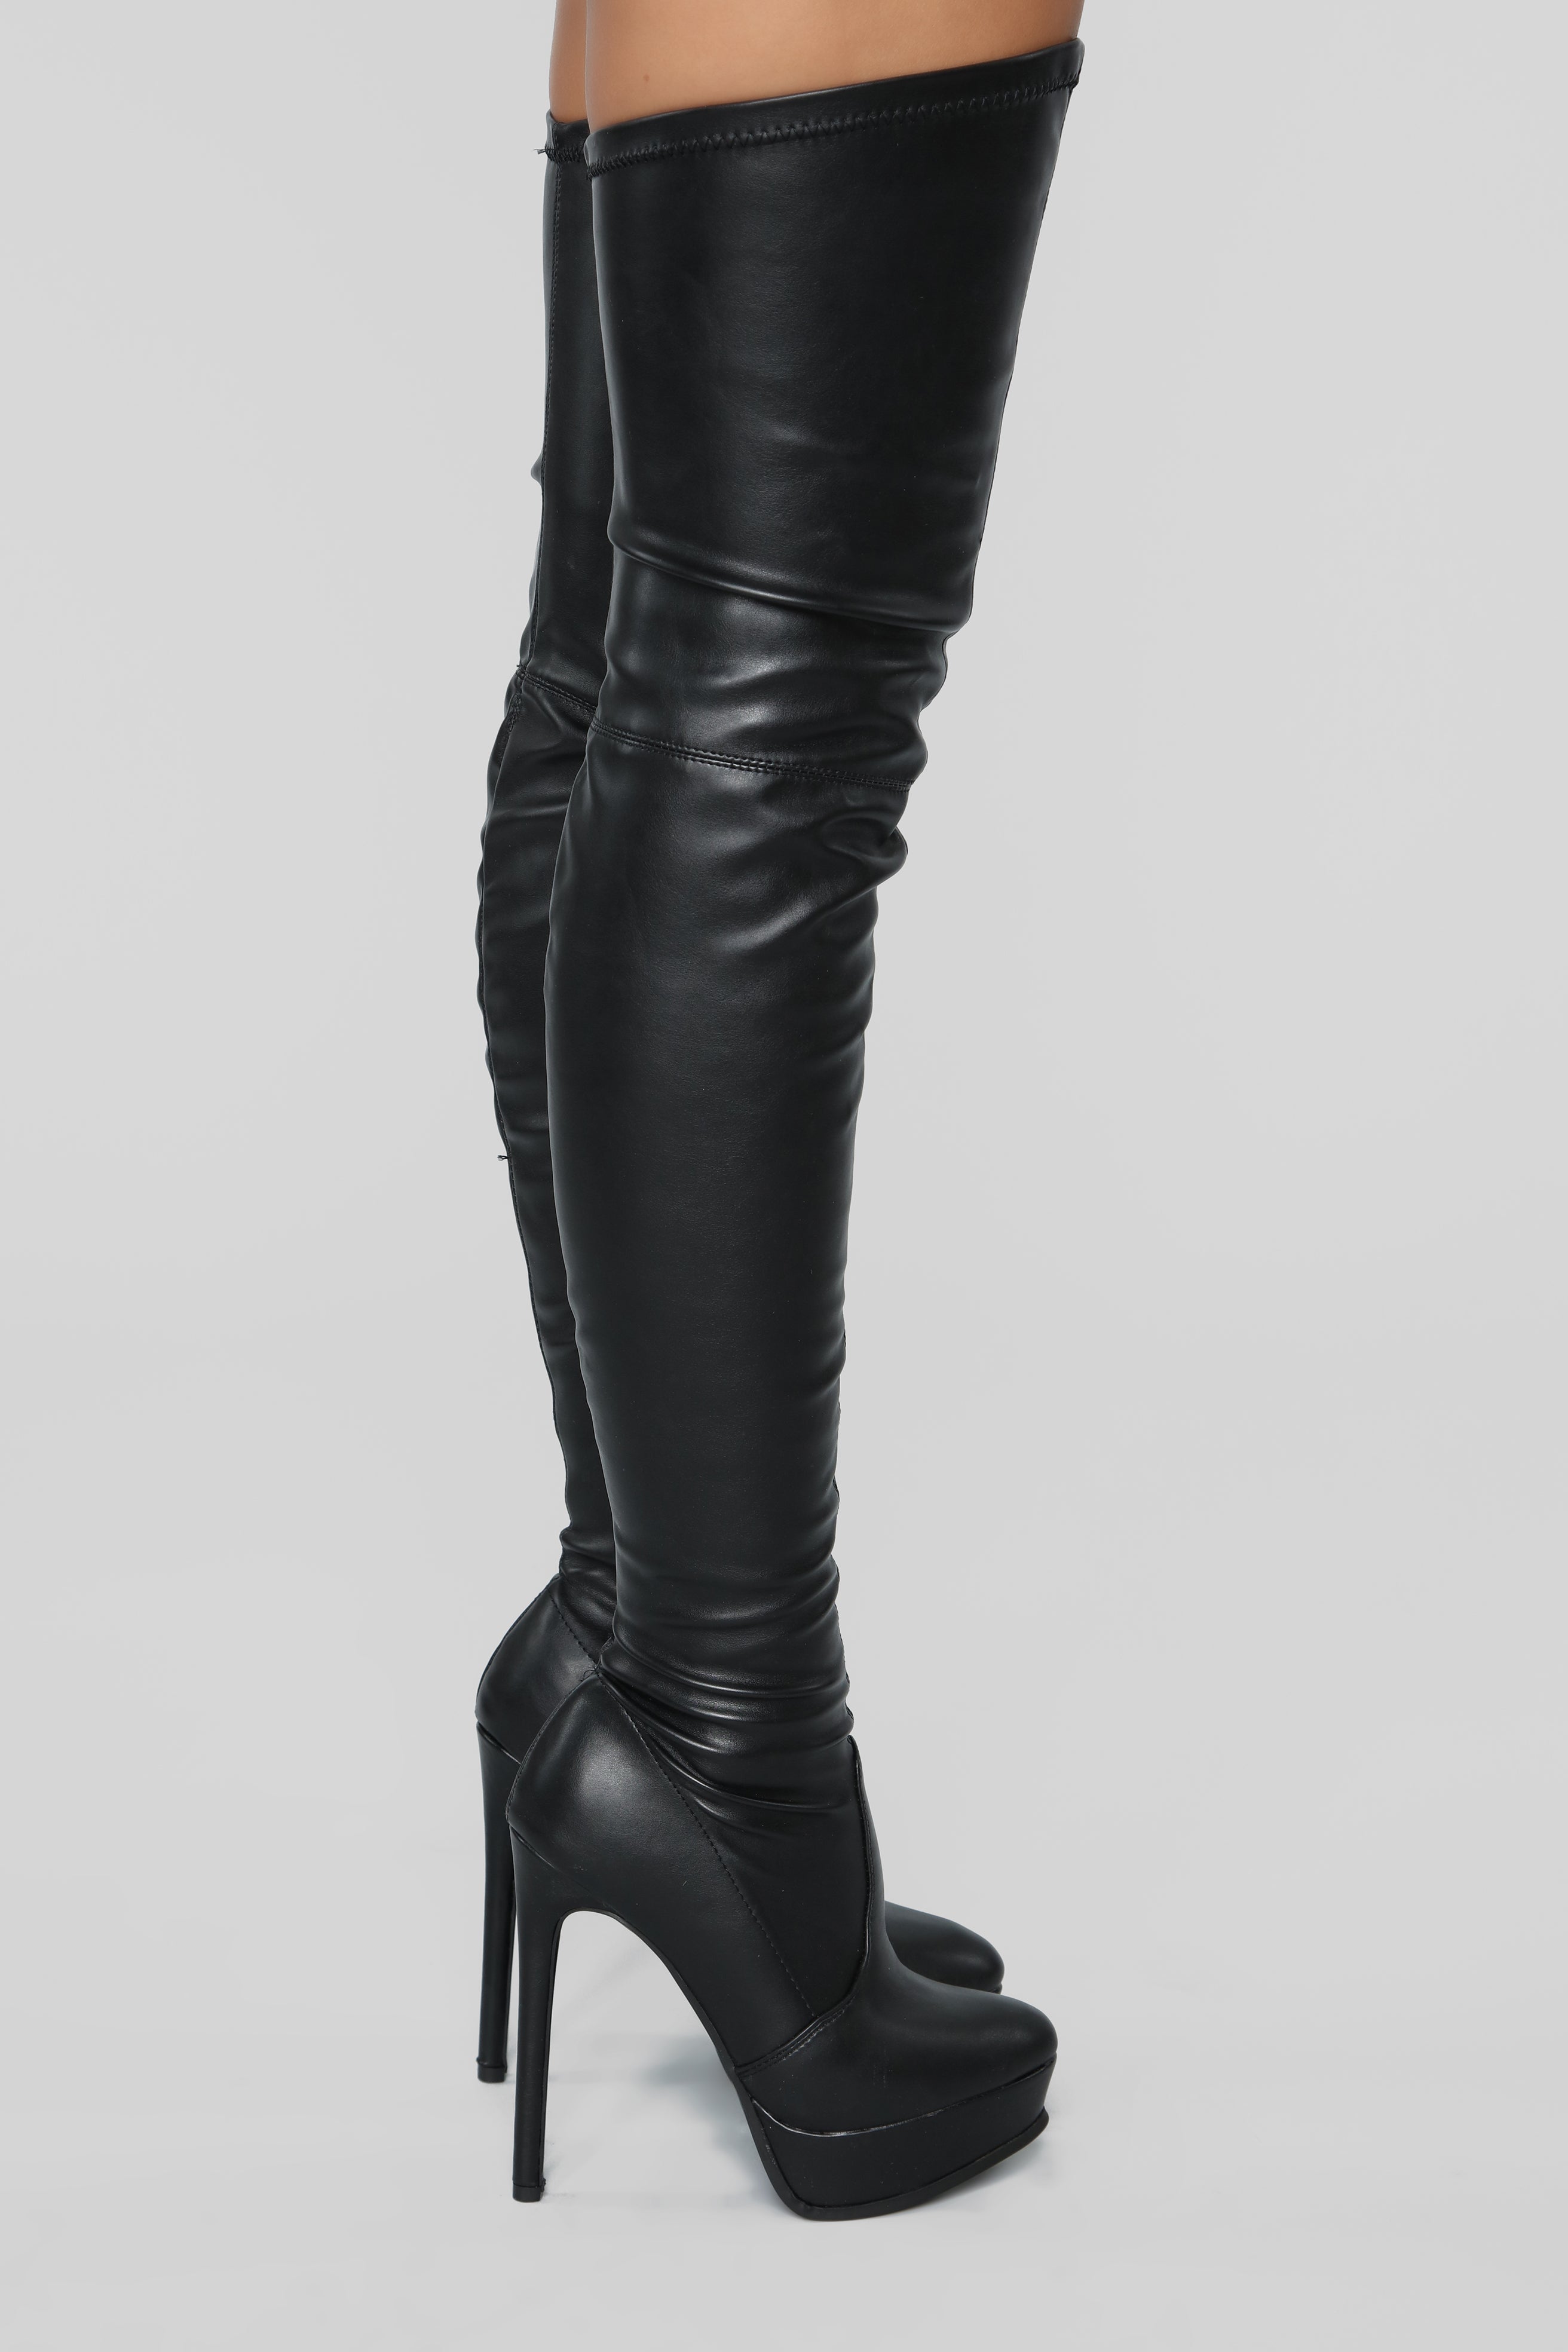 fashion nova plus size thigh high boots